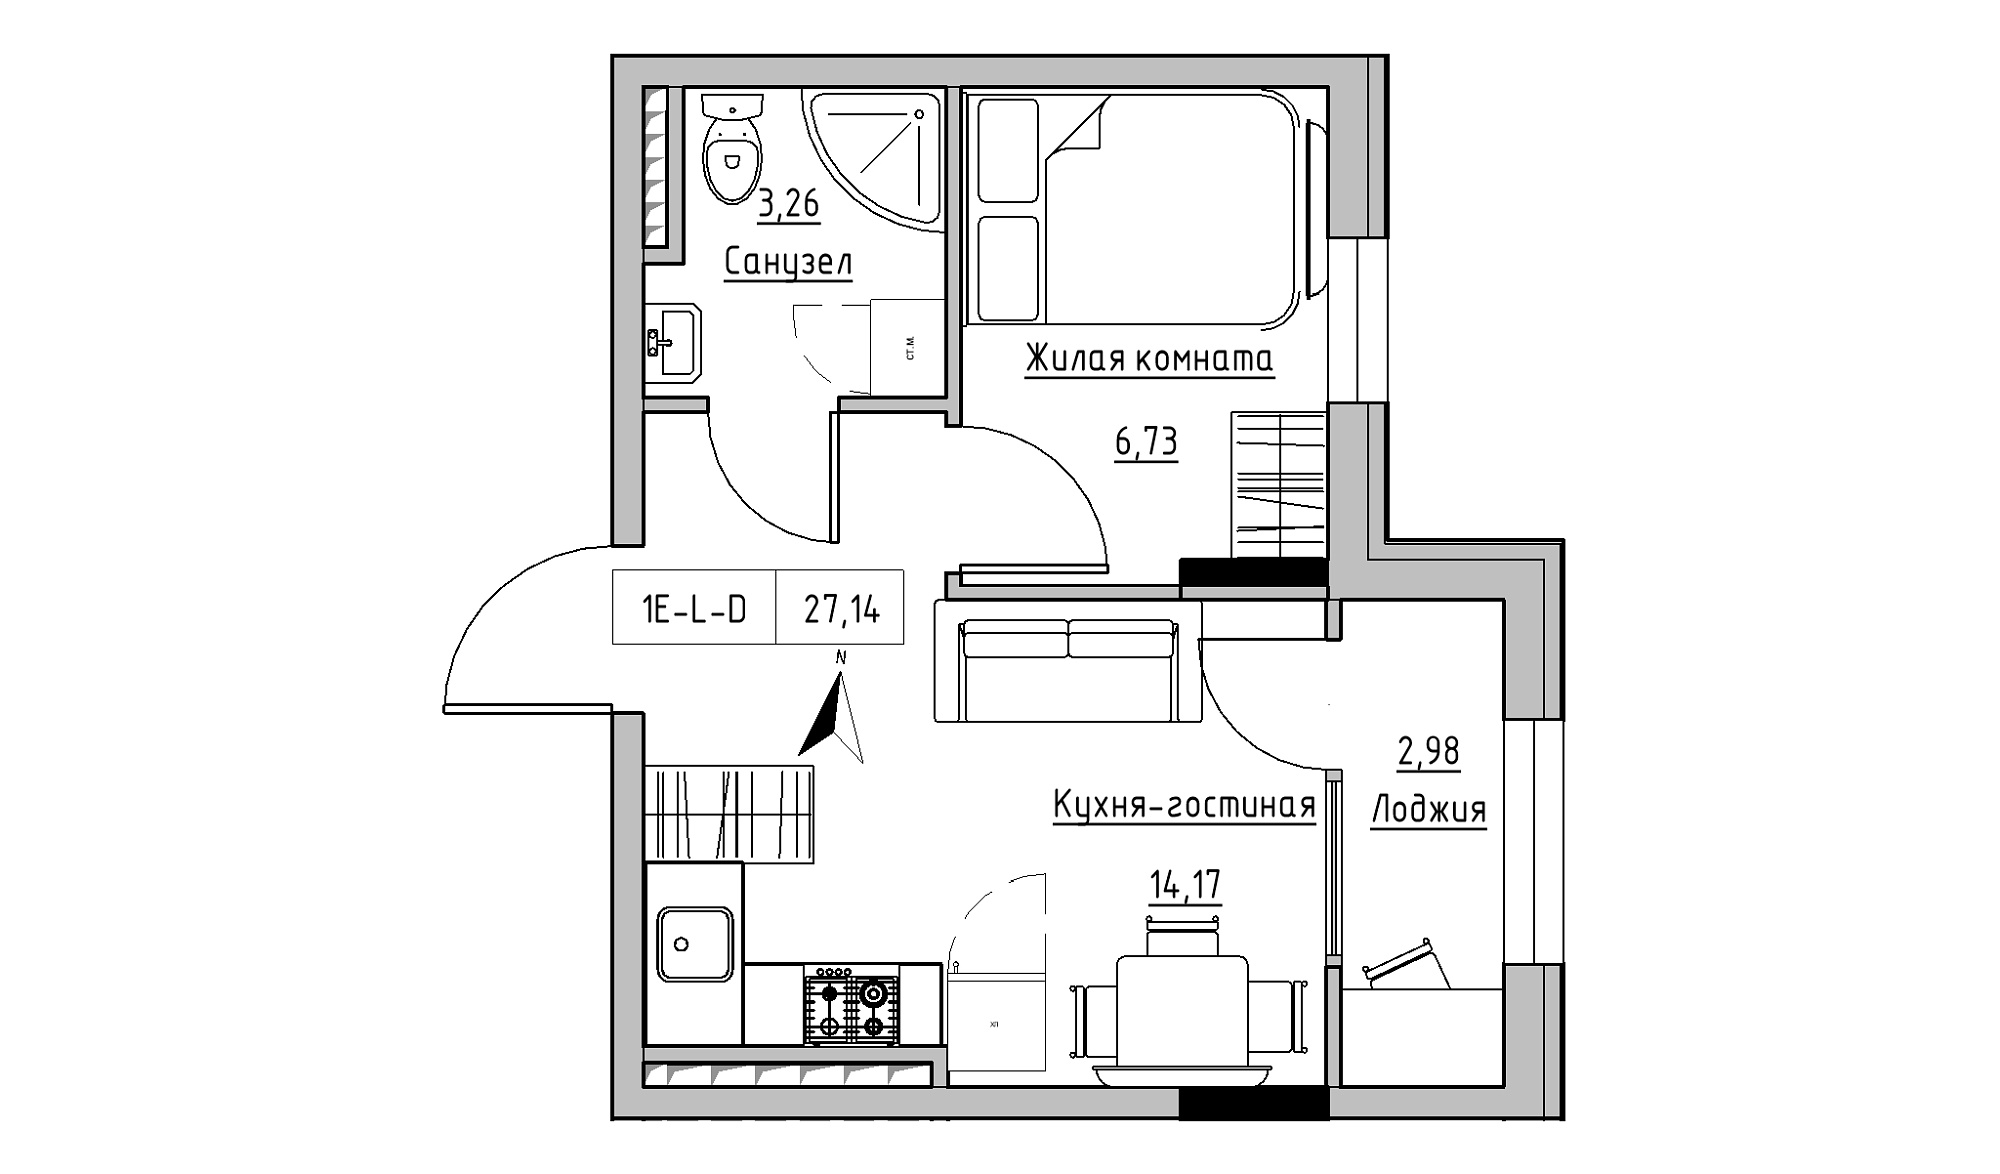 Planning 1-rm flats area 27.14m2, KS-025-05/0001.